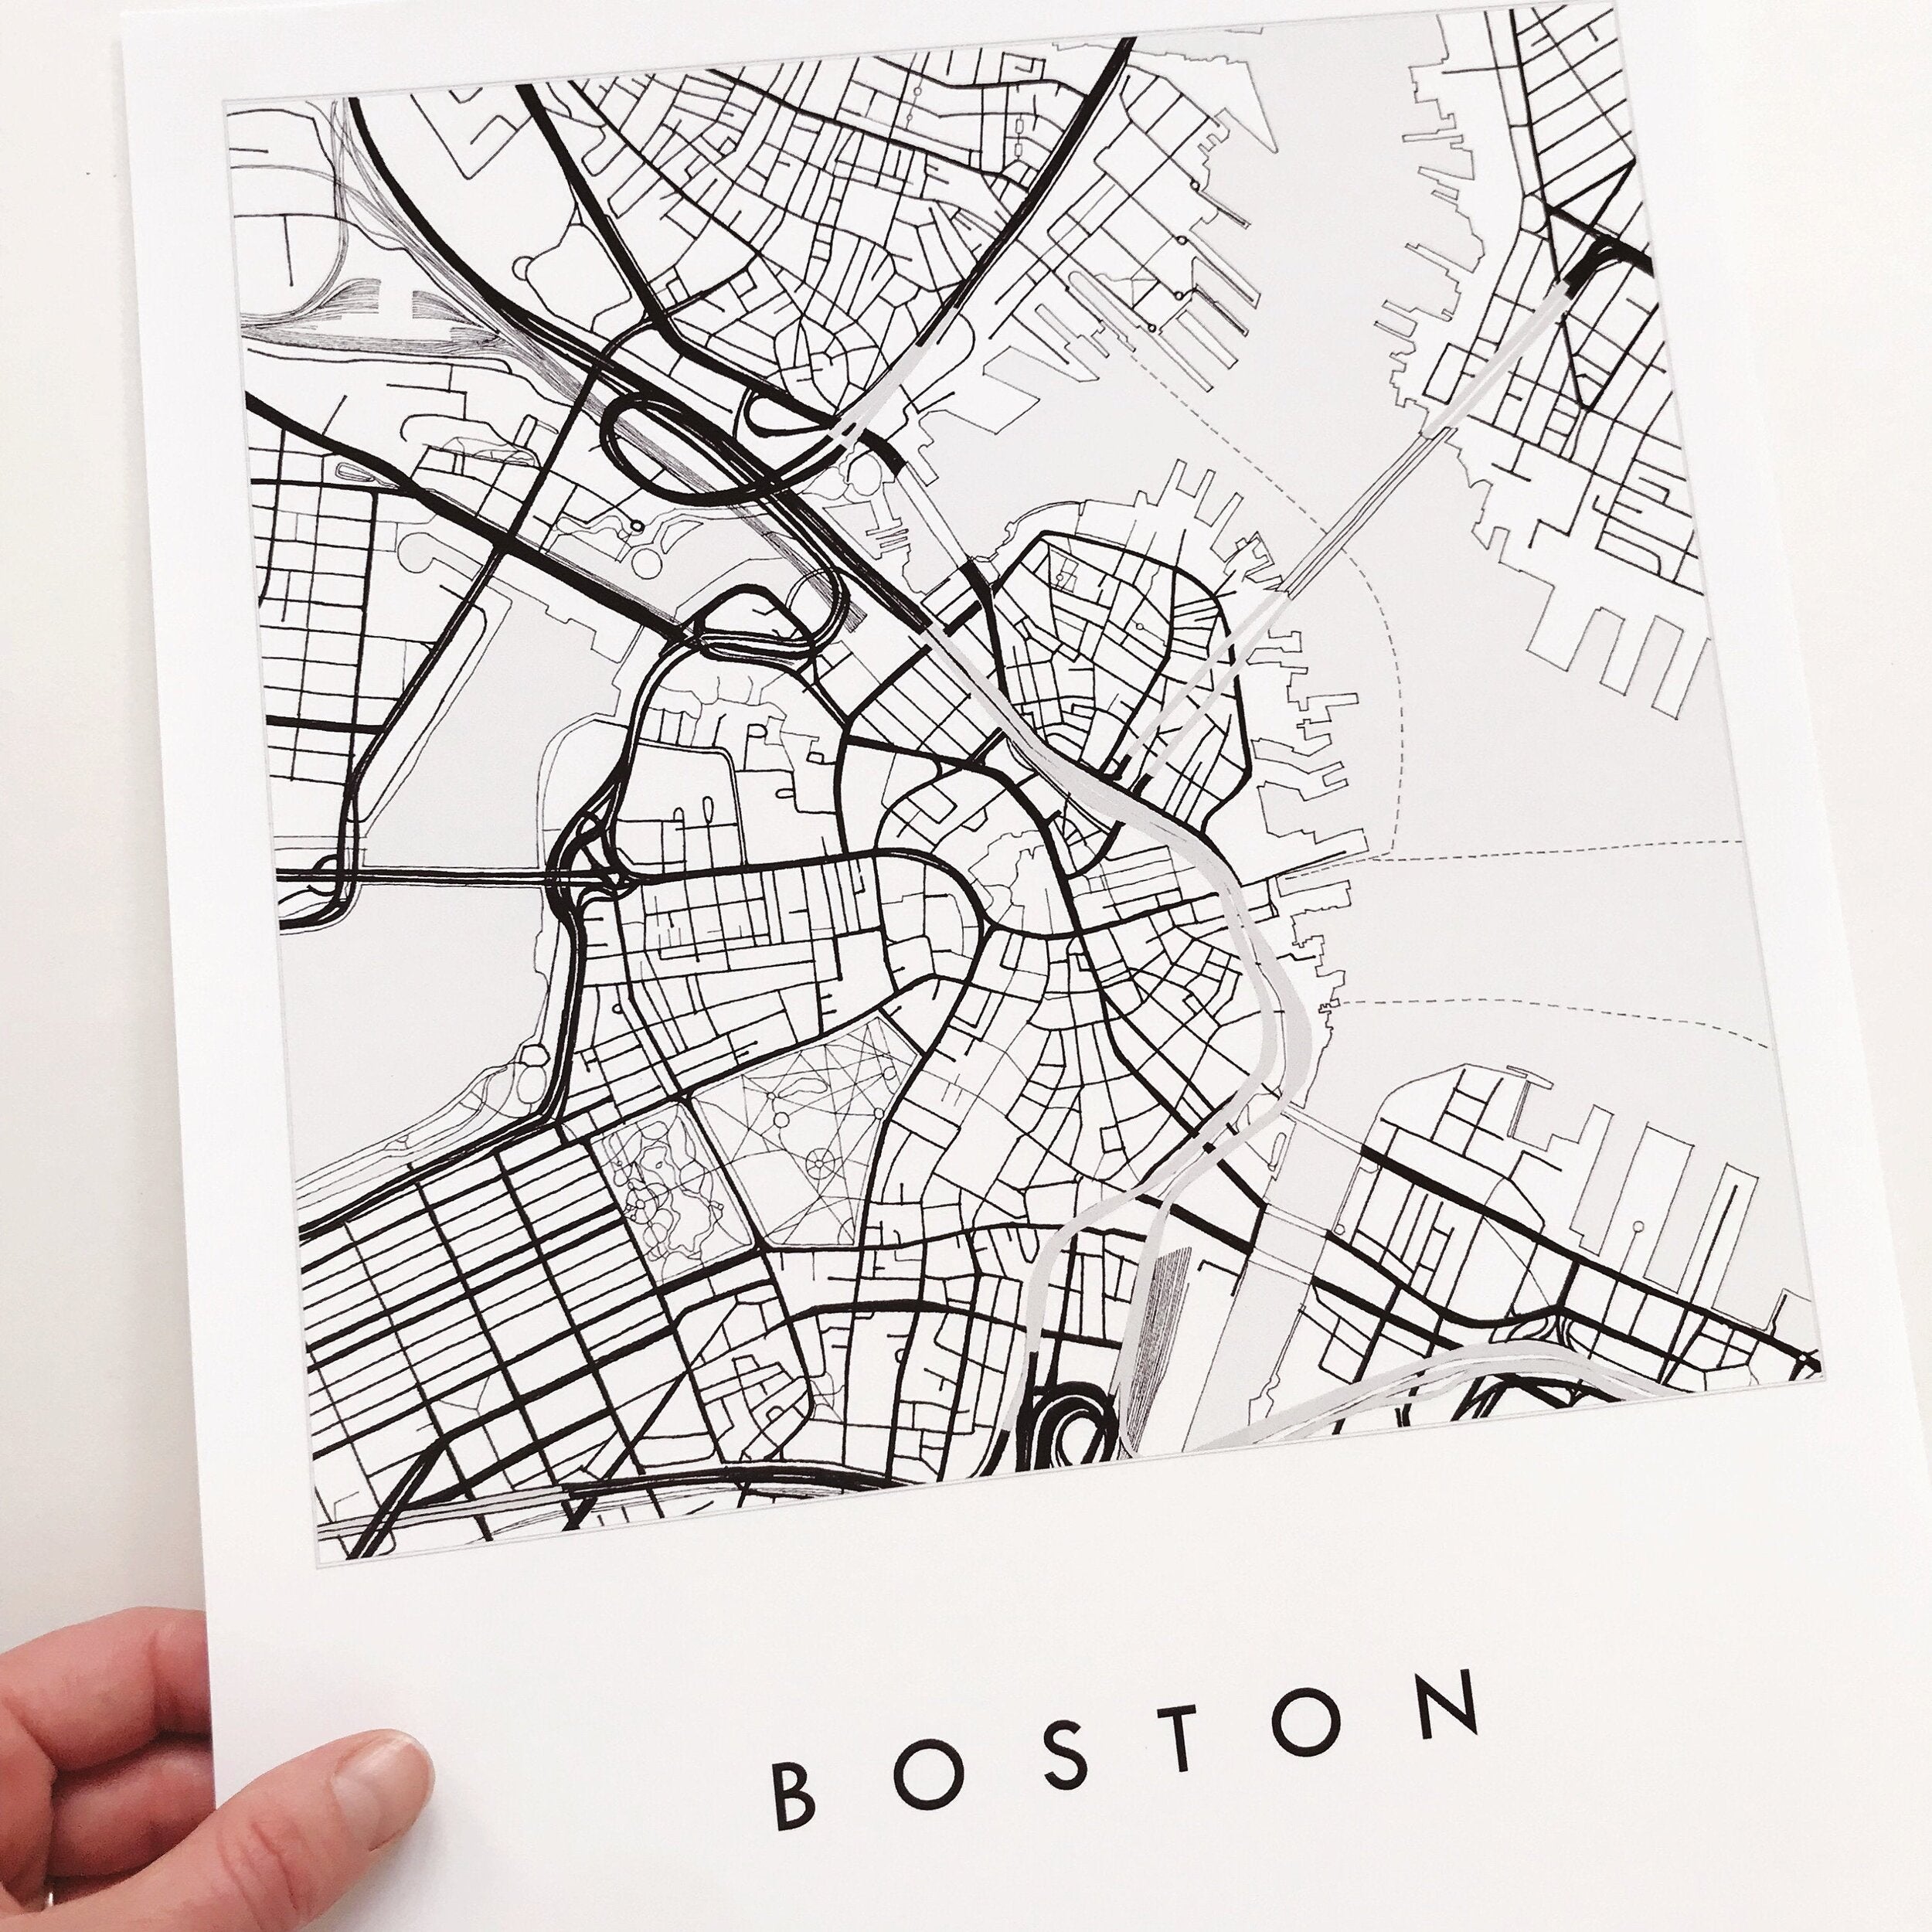 BOSTON Massachusetts City Lines Map: PRINT